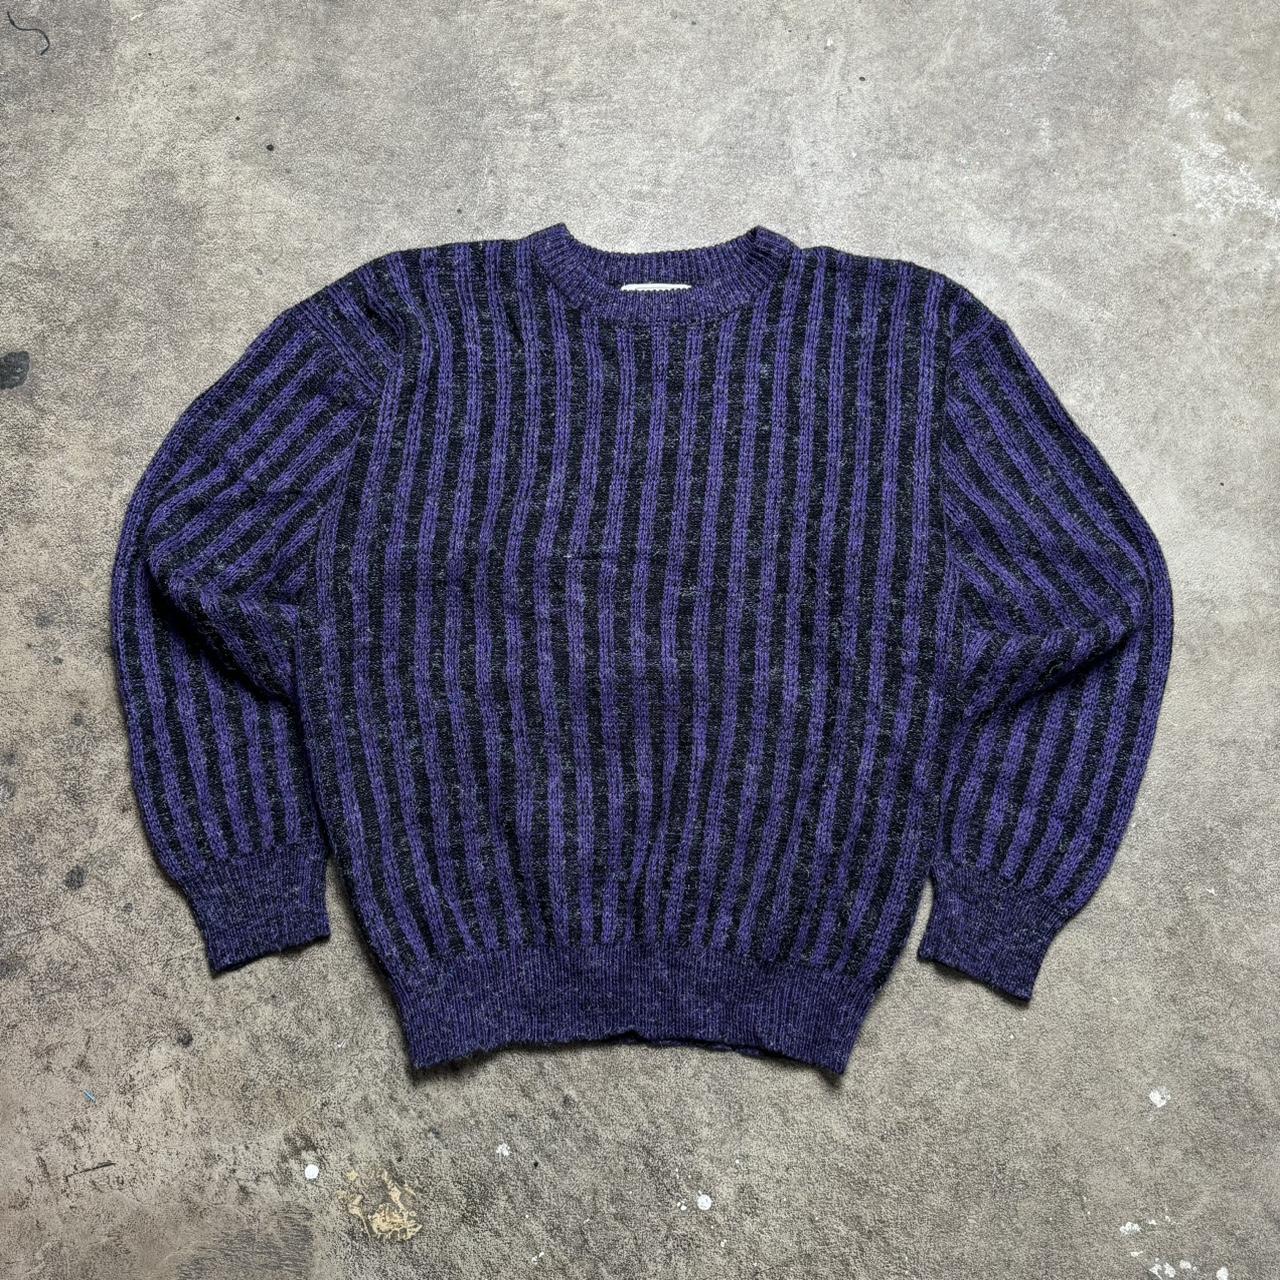 Vintage 90s Purple Striped Sweater Claude Rene... - Depop